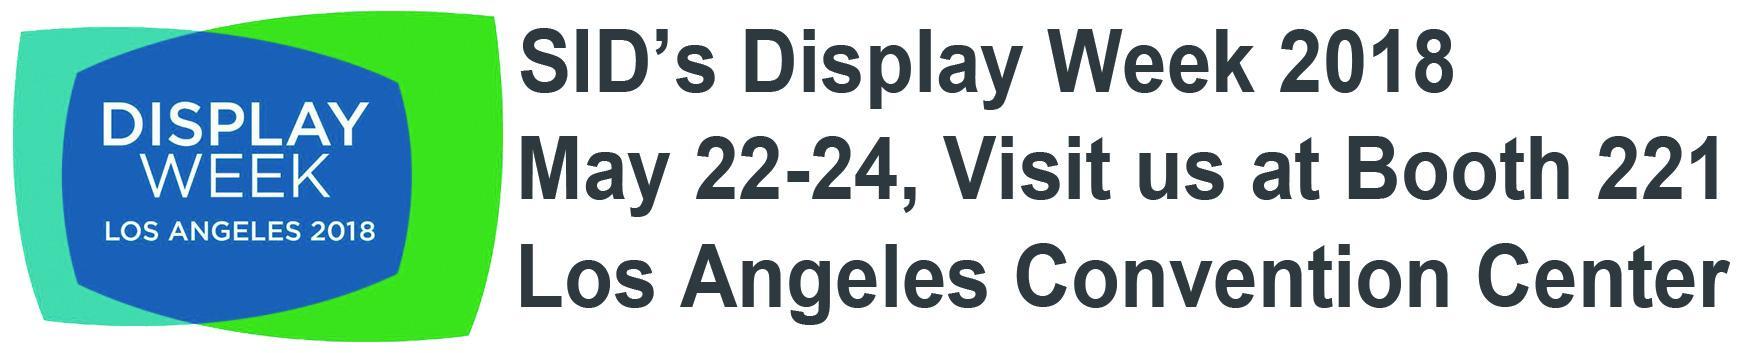 DLC显示器将参加在洛杉矶举行的SID2018